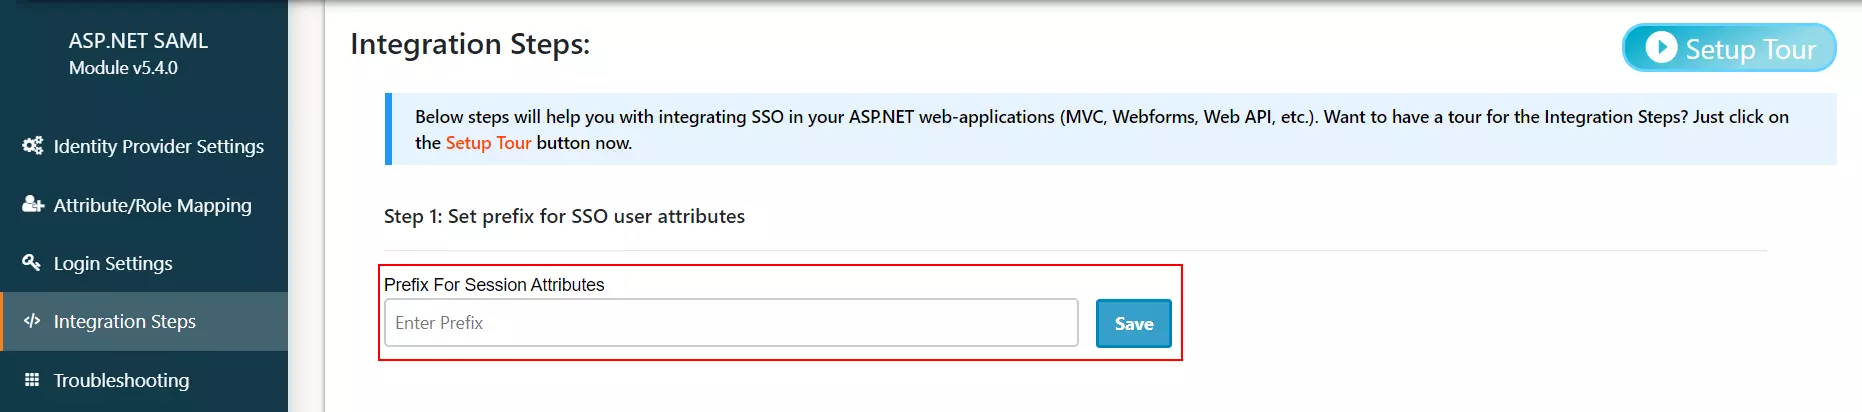 ASP.NET SAML Single Sign-On (SSO) using Azure AD (Microsoft Entra ID) as IDP - Prefix SSO Attributes